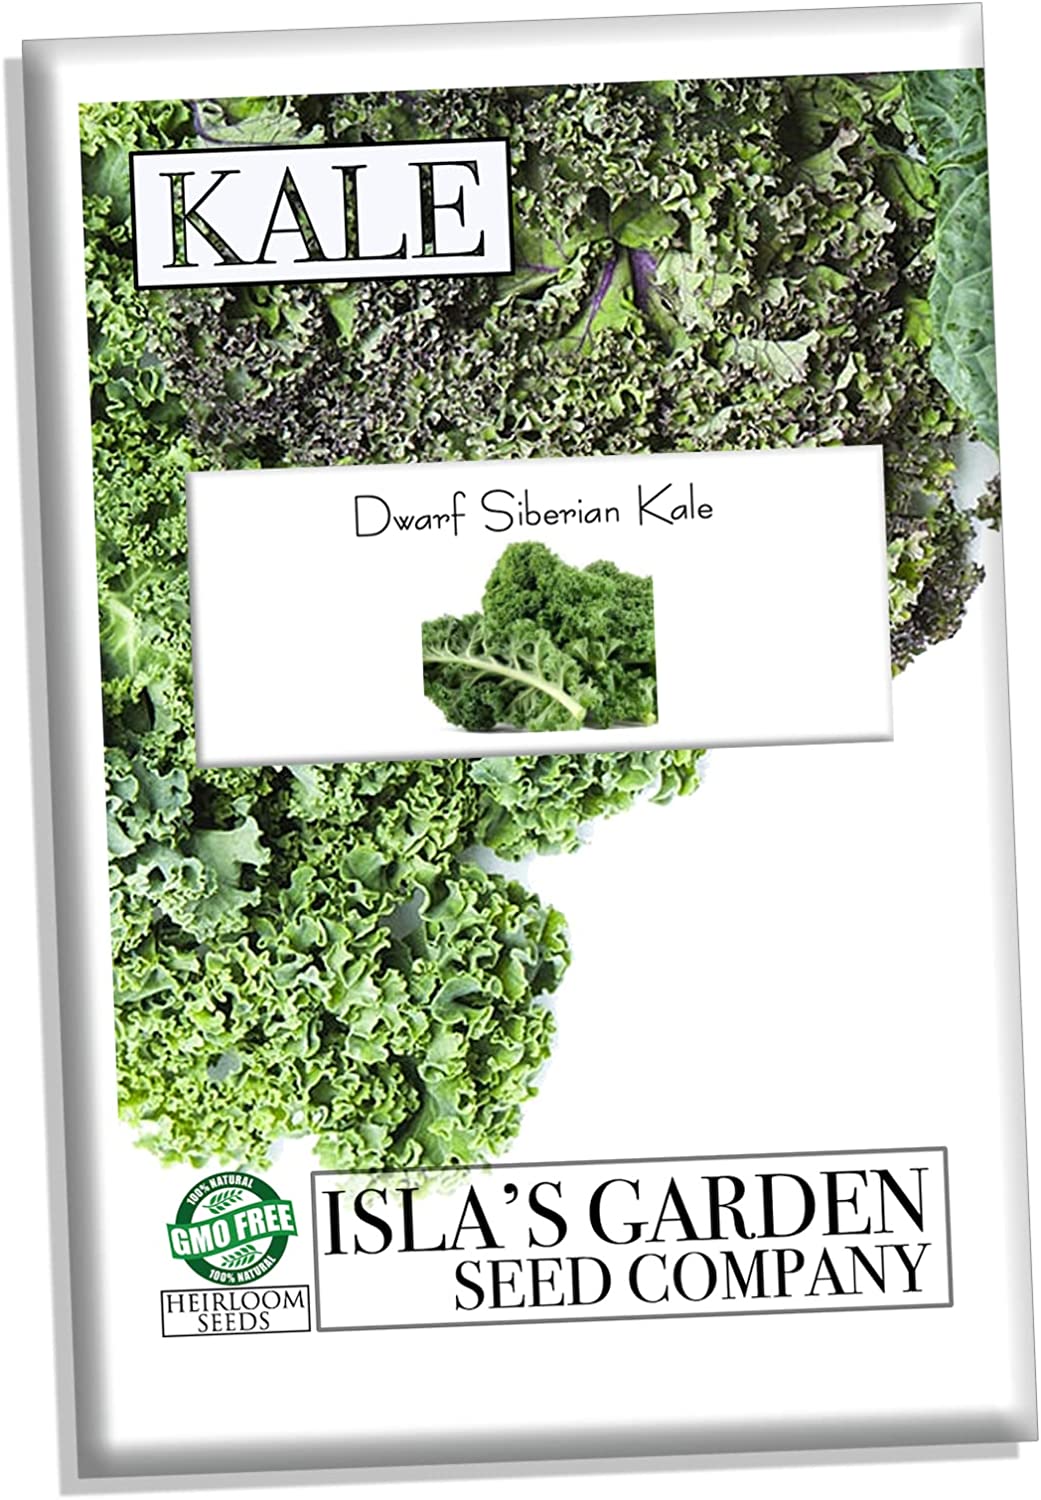 Dwarf Siberian Kale Seeds for Planting, 500+ Heirloom Seeds Per Packet, Isla's Garden Seeds , Non GMO Seeds, Botanical Name: Brassica oleracea, Great Home Garden Gift